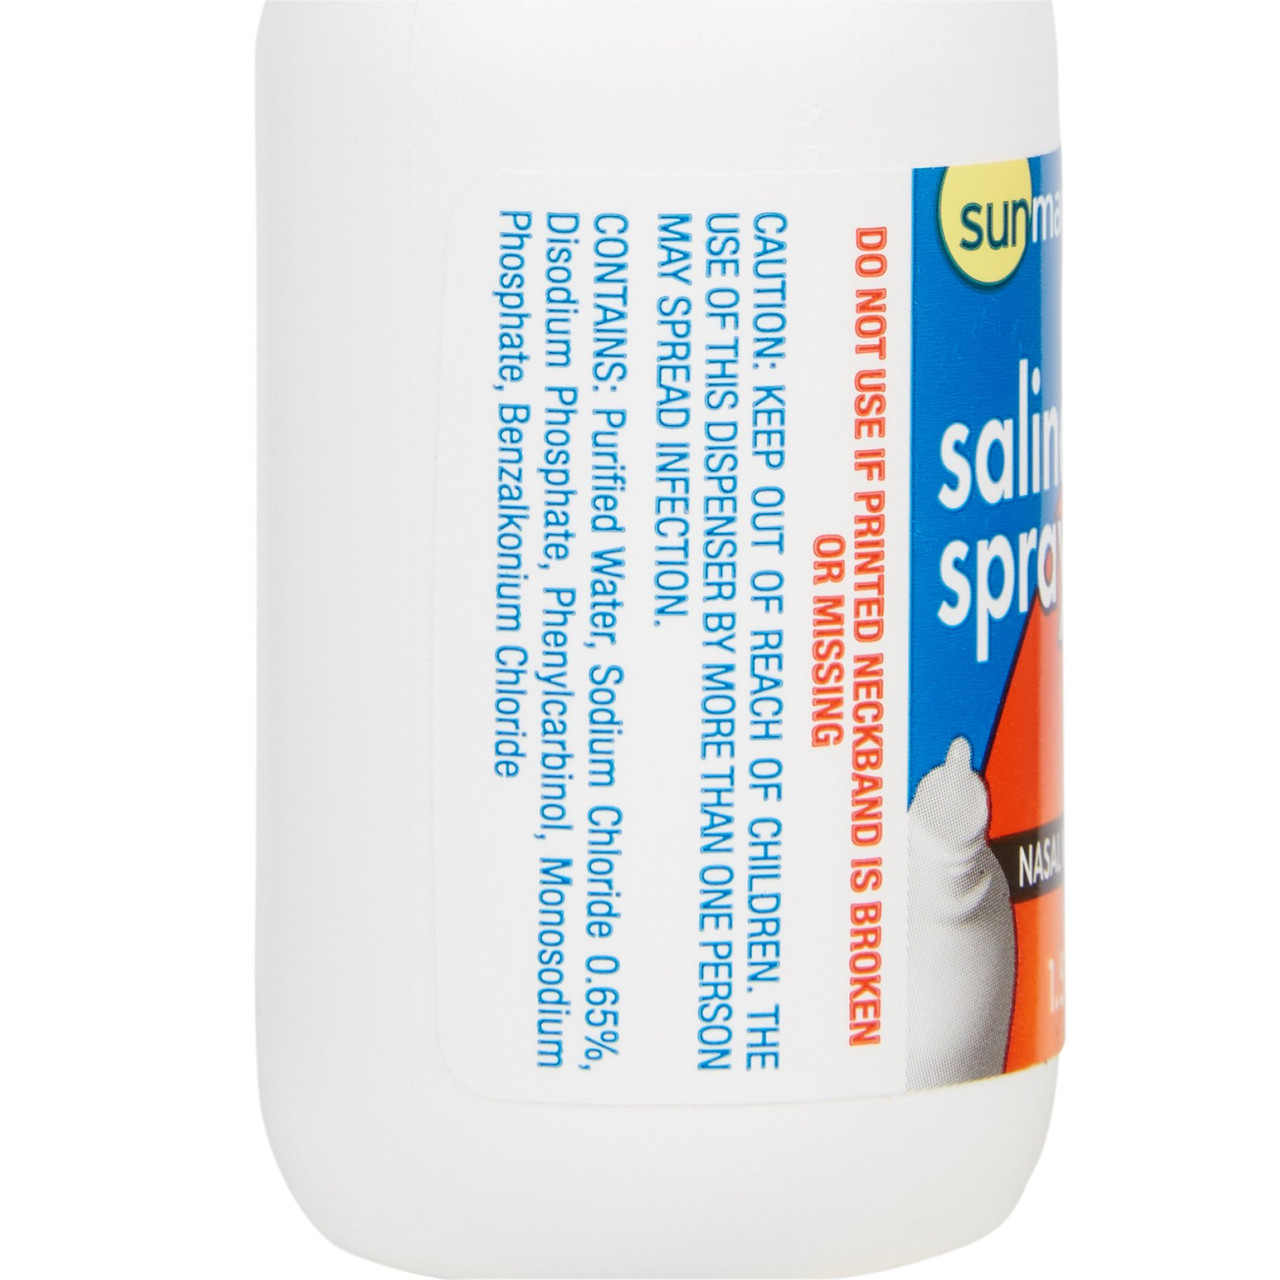 Neilmed Sinus Rinse Saline Nasal Kit 0.65% Strength 50 Packets, 05928000100  - SOLD BY: PACK OF ONE